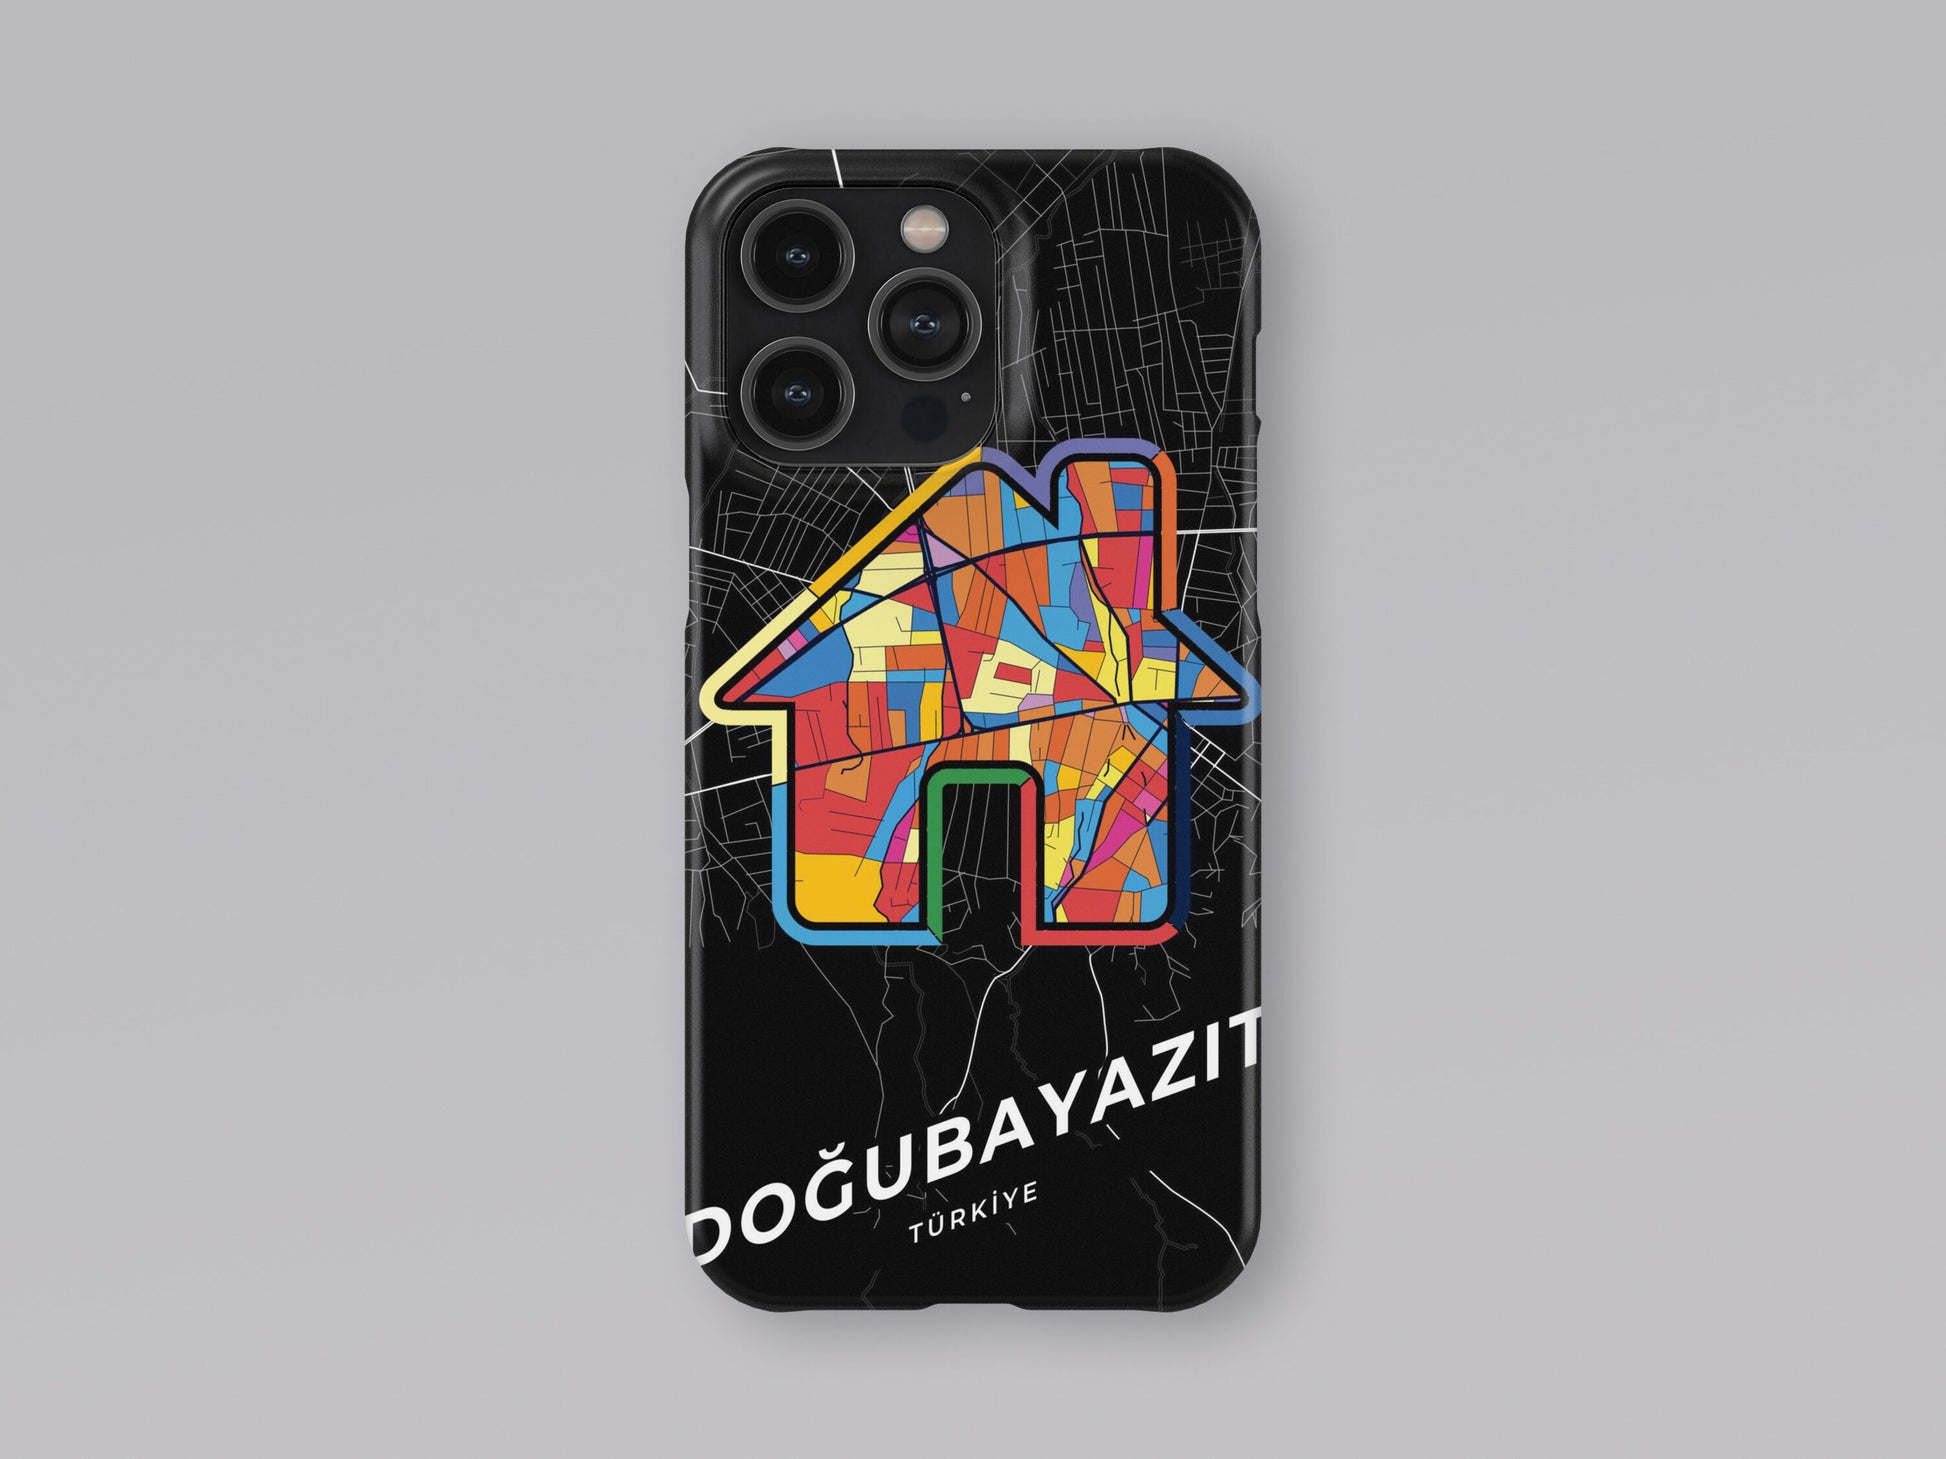 Doğubayazıt Turkey slim phone case with colorful icon. Birthday, wedding or housewarming gift. Couple match cases. 3